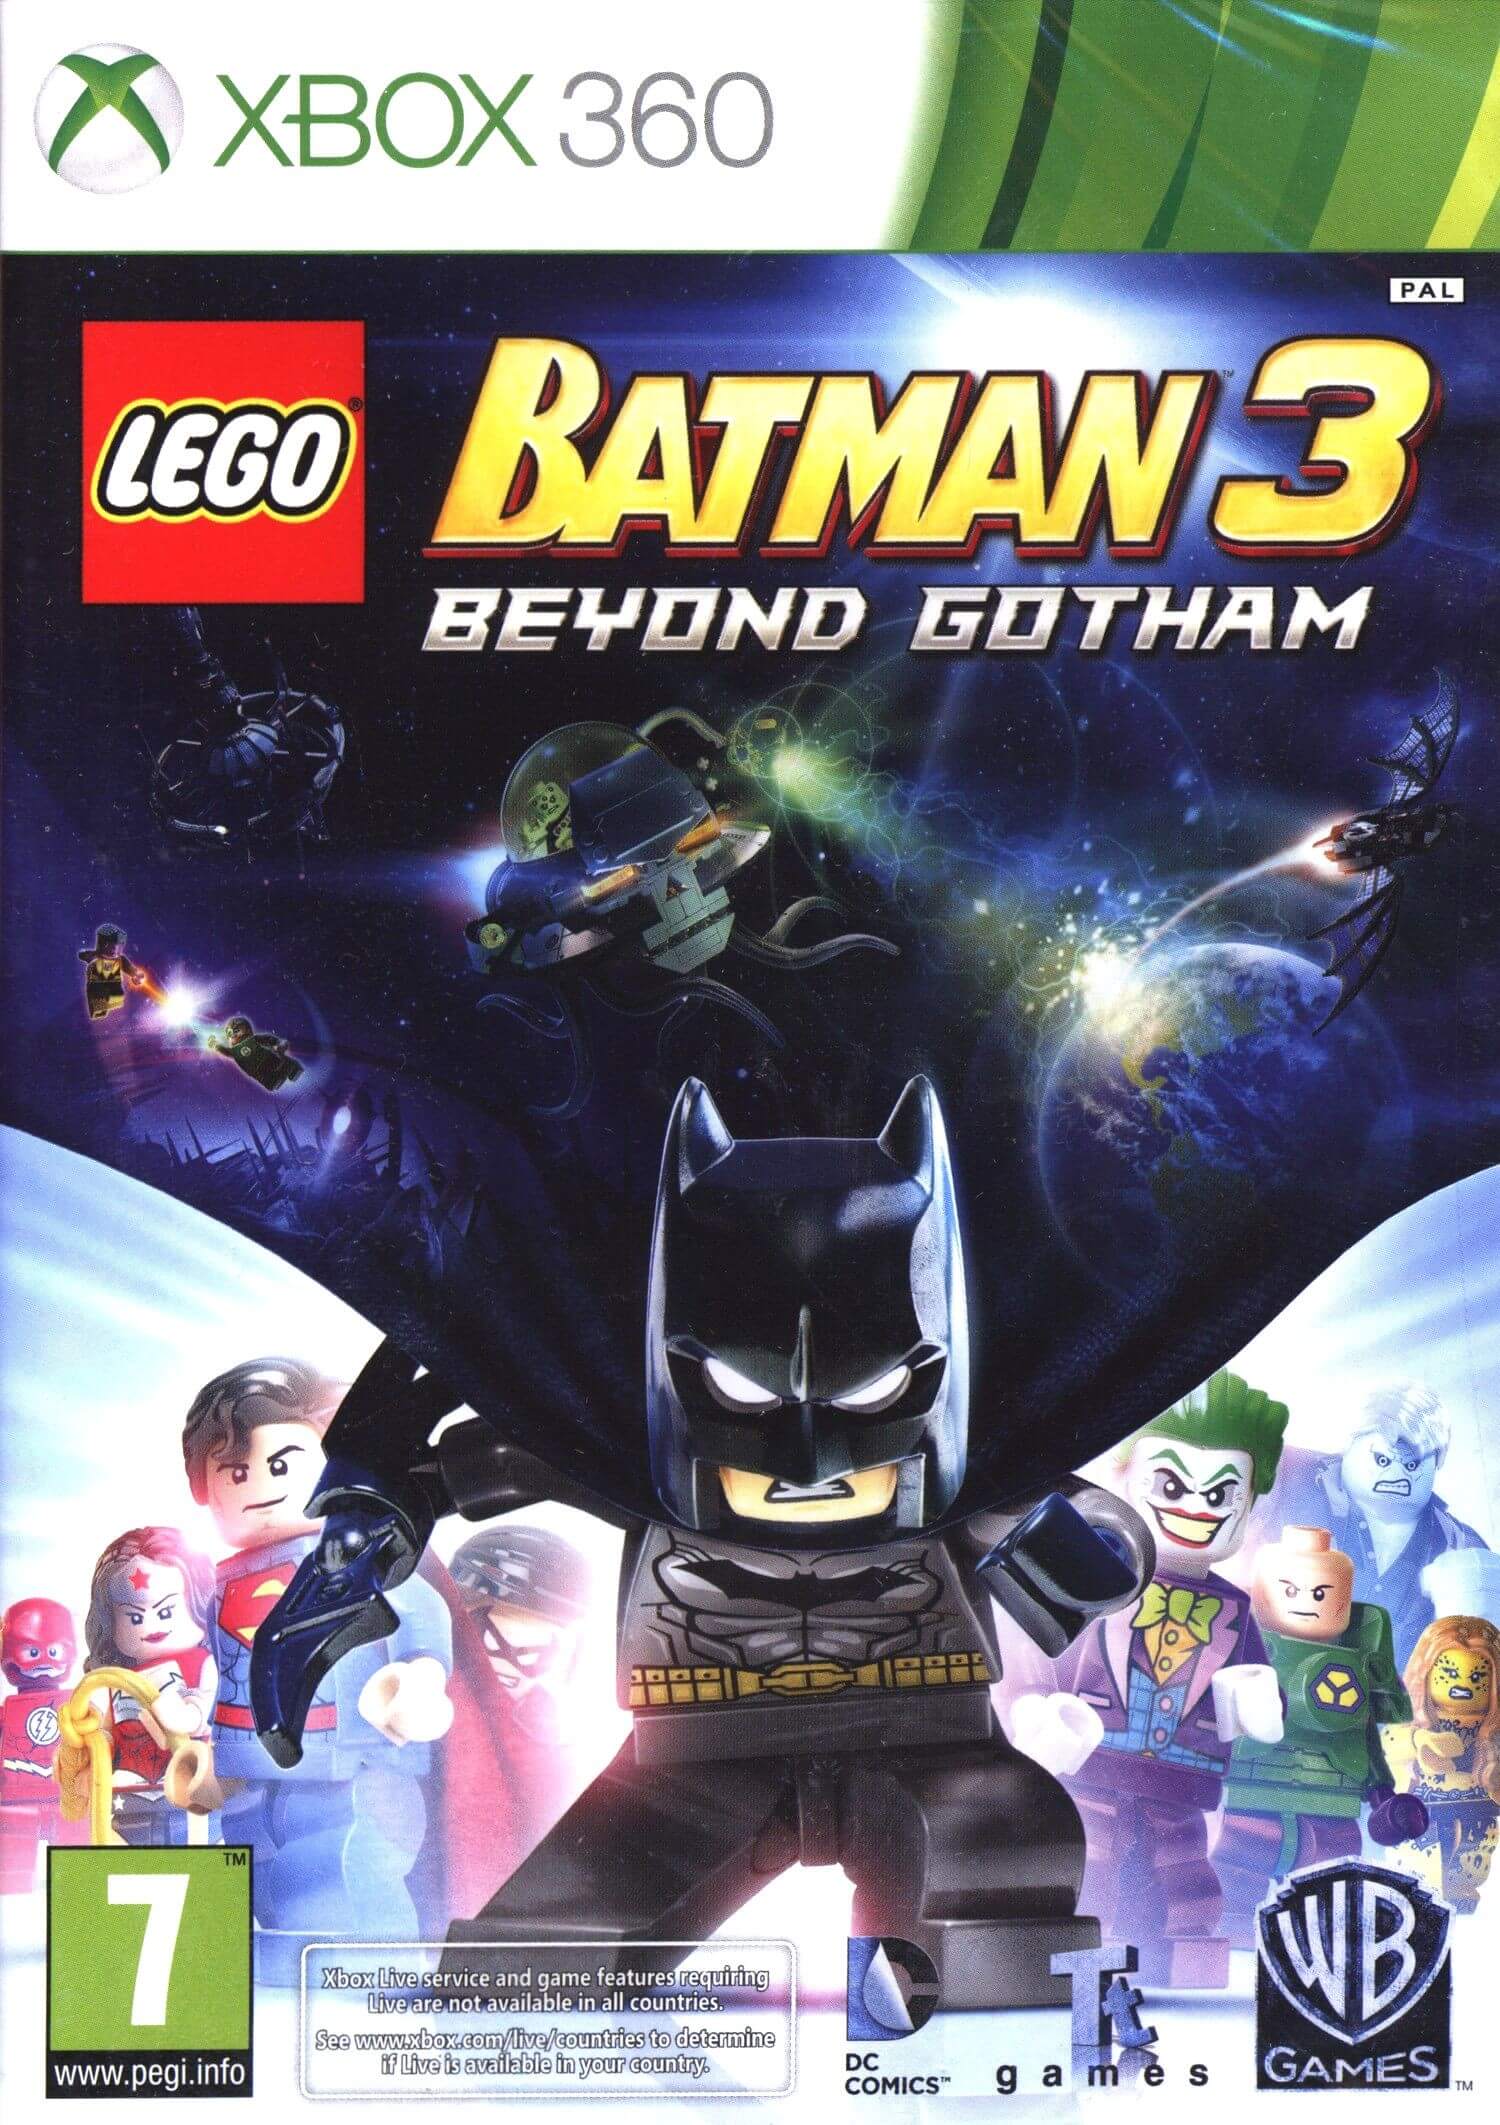 LEGO Batman 3 Beyond Gotham Prima Official Game Guides